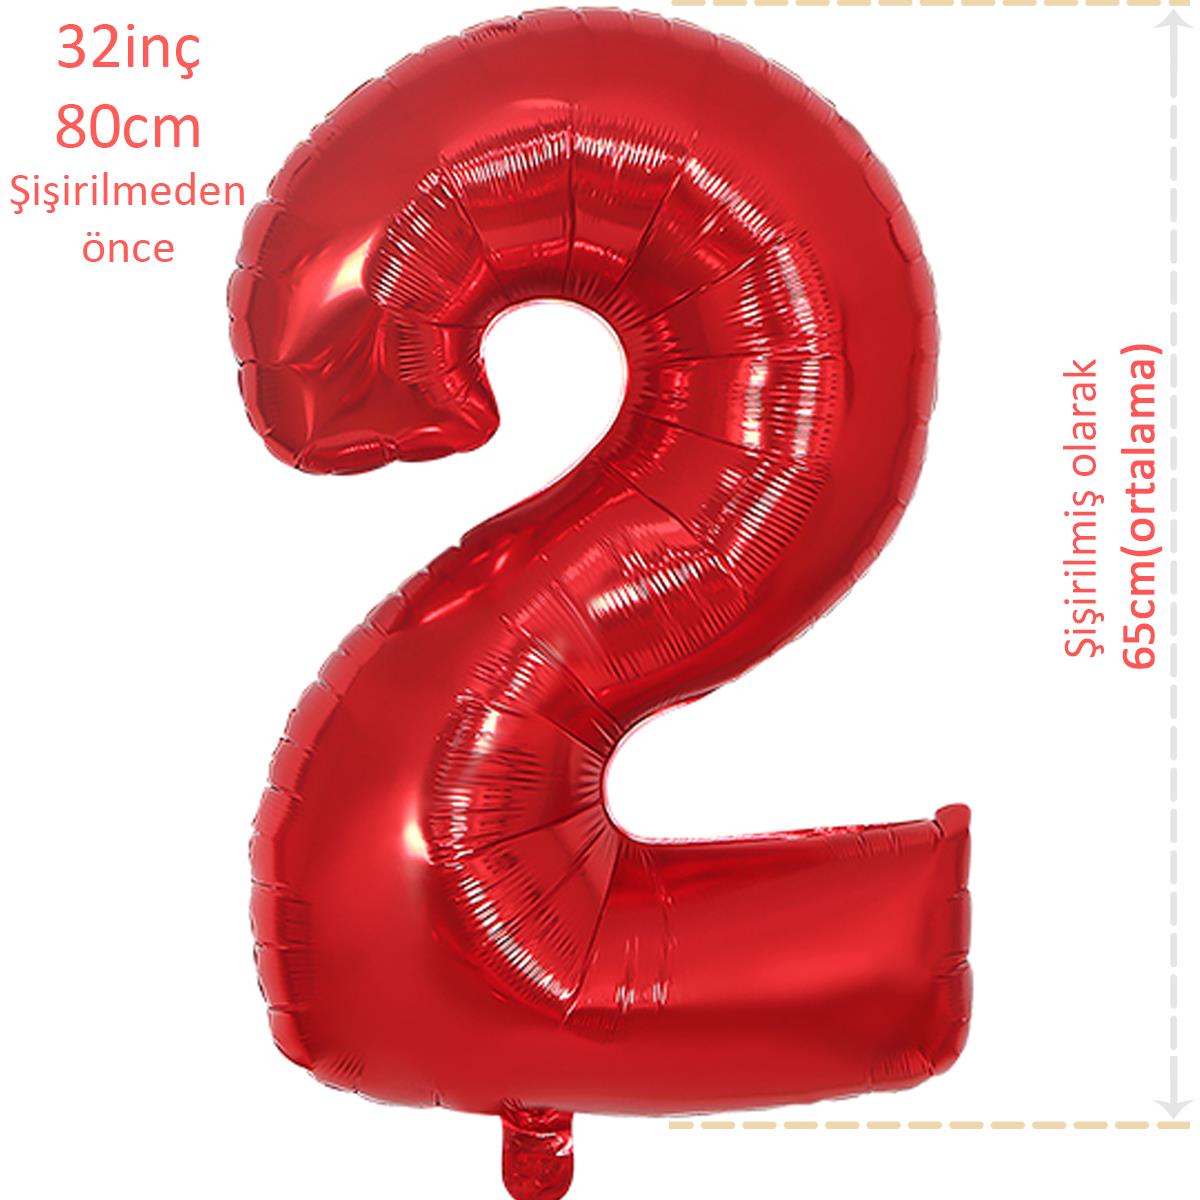 Rakam Folyo Balon Kırmızı 2 Rakamı 32inç 80cm